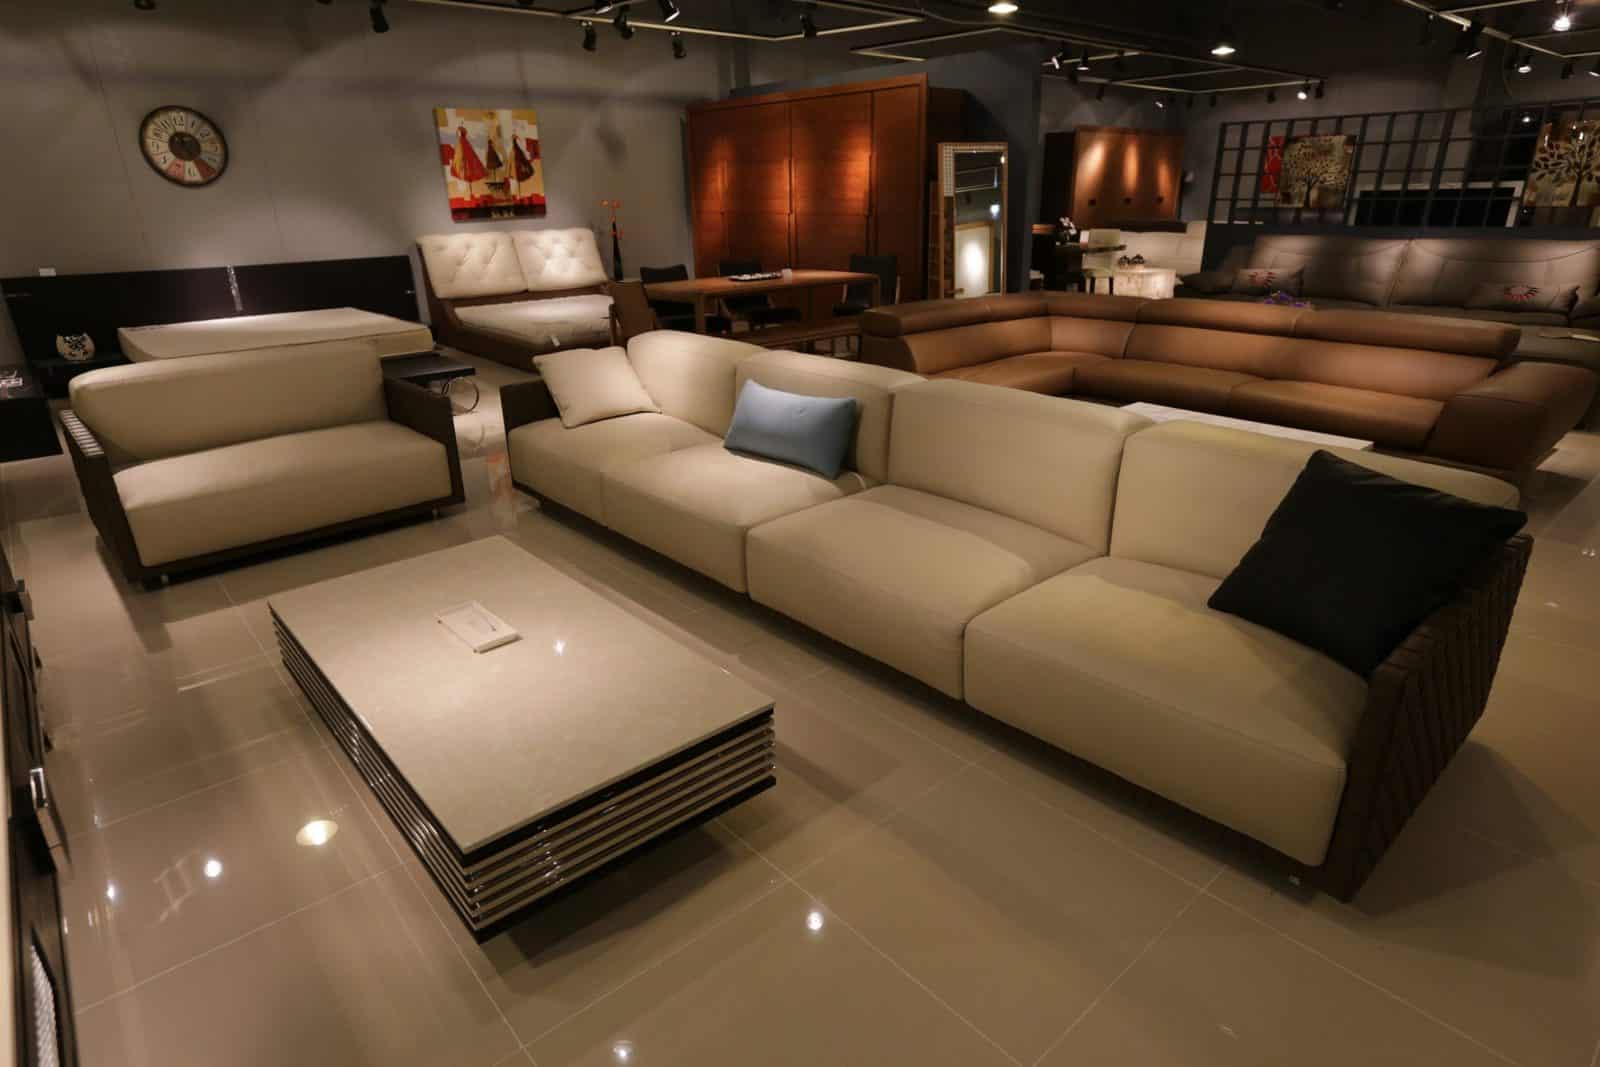 Online Living Room Furniture Store In Nj